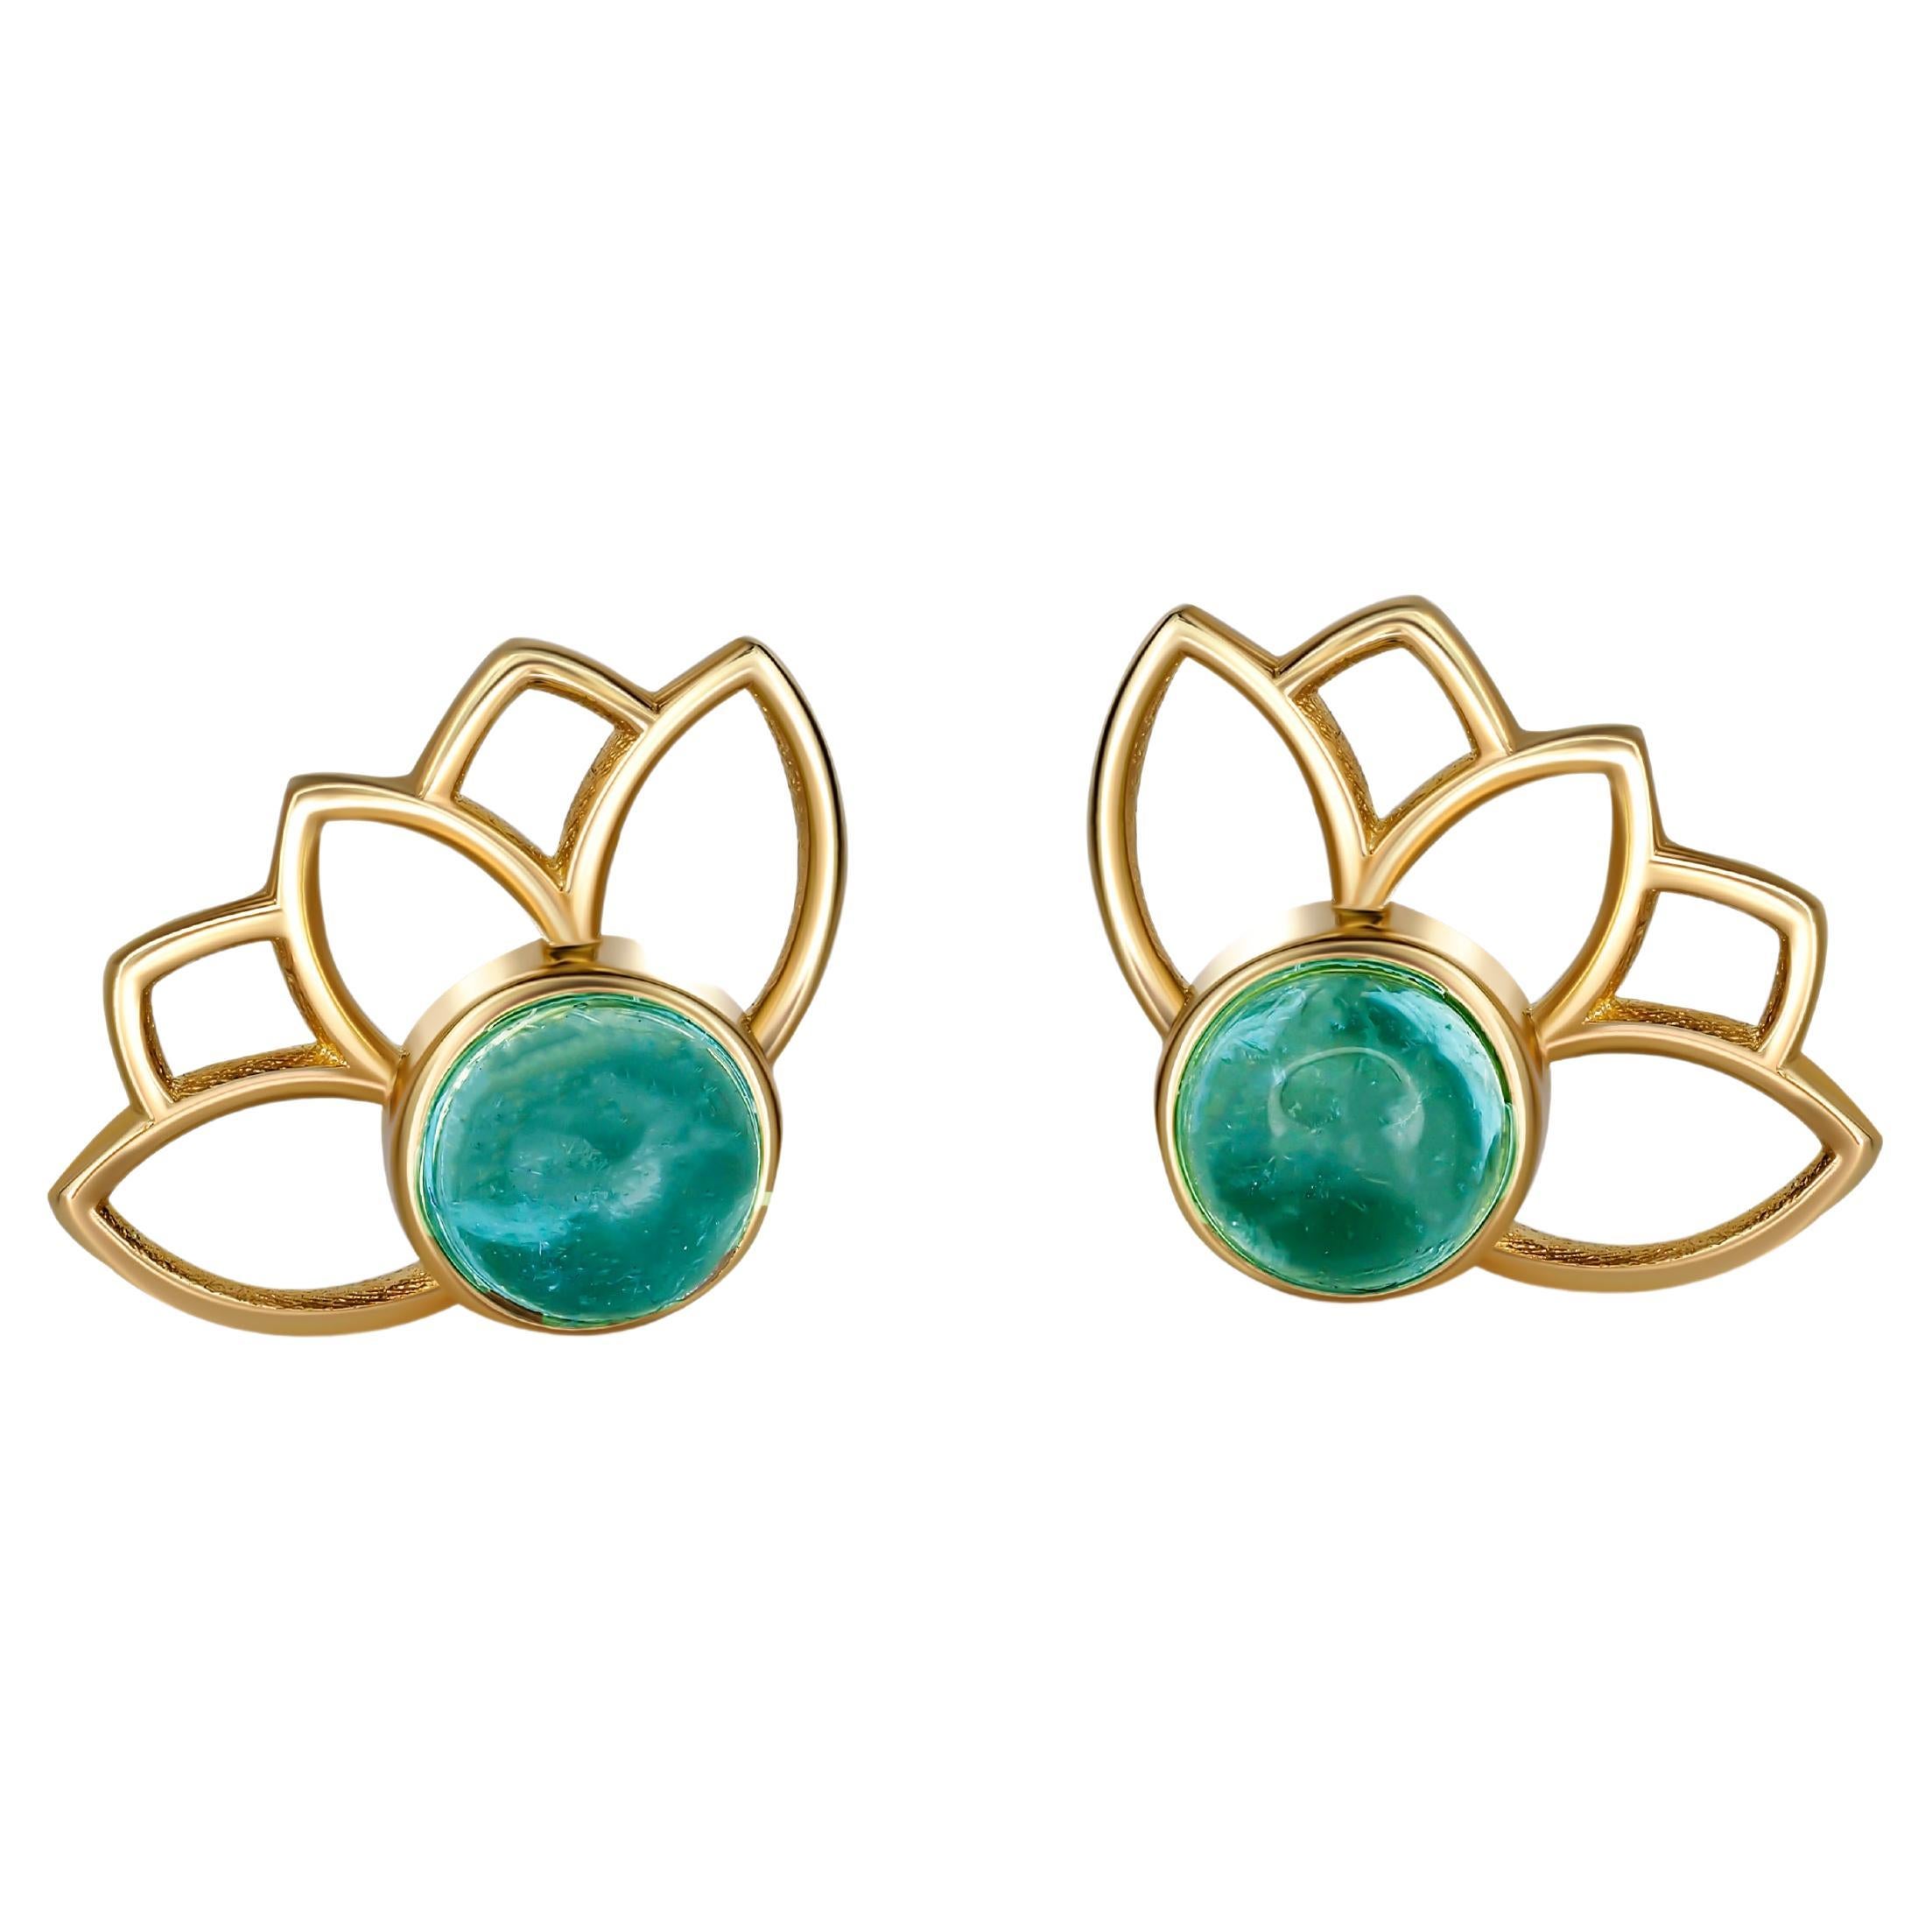 Lotus flower earrings studs in 14k gold. 